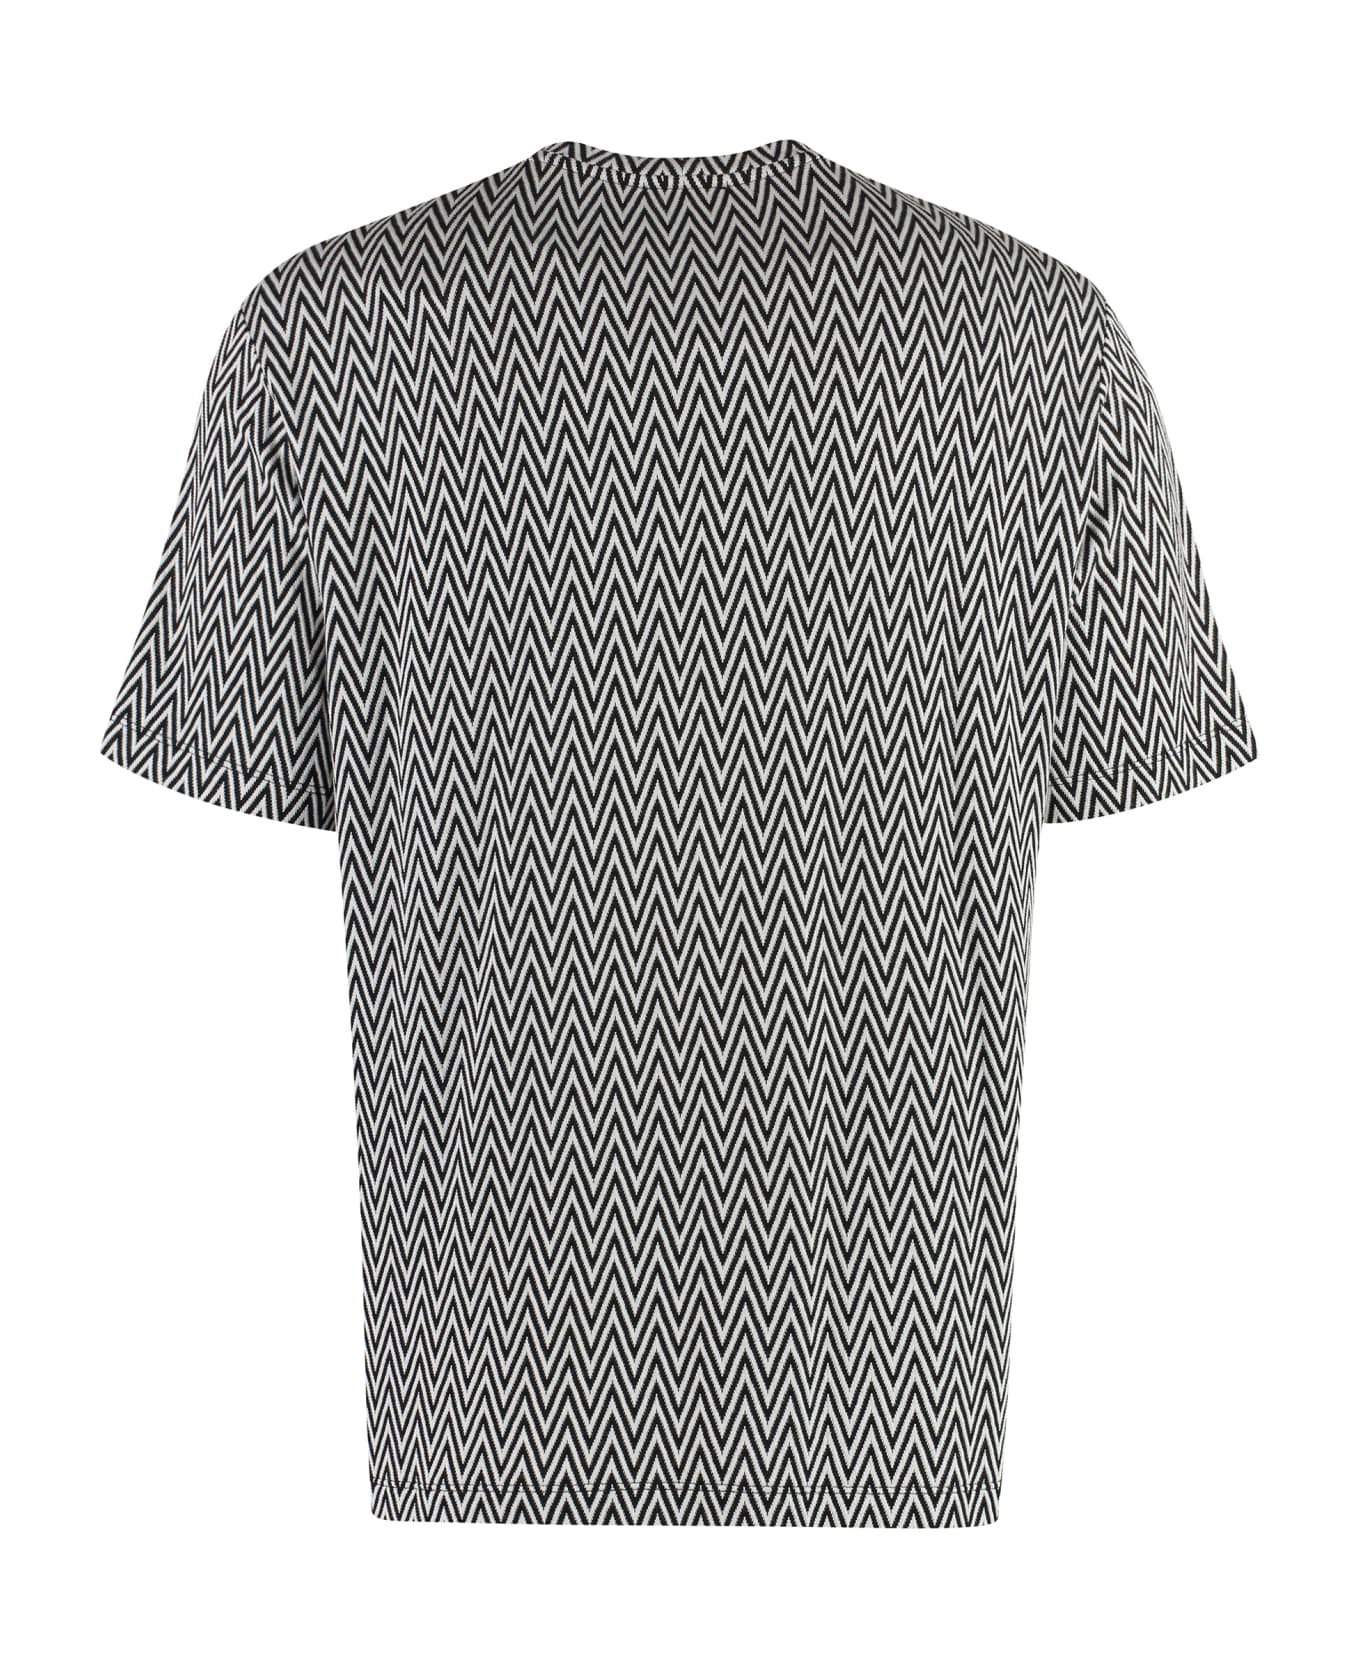 Giorgio Armani Jacquard Knit T-shirt - White